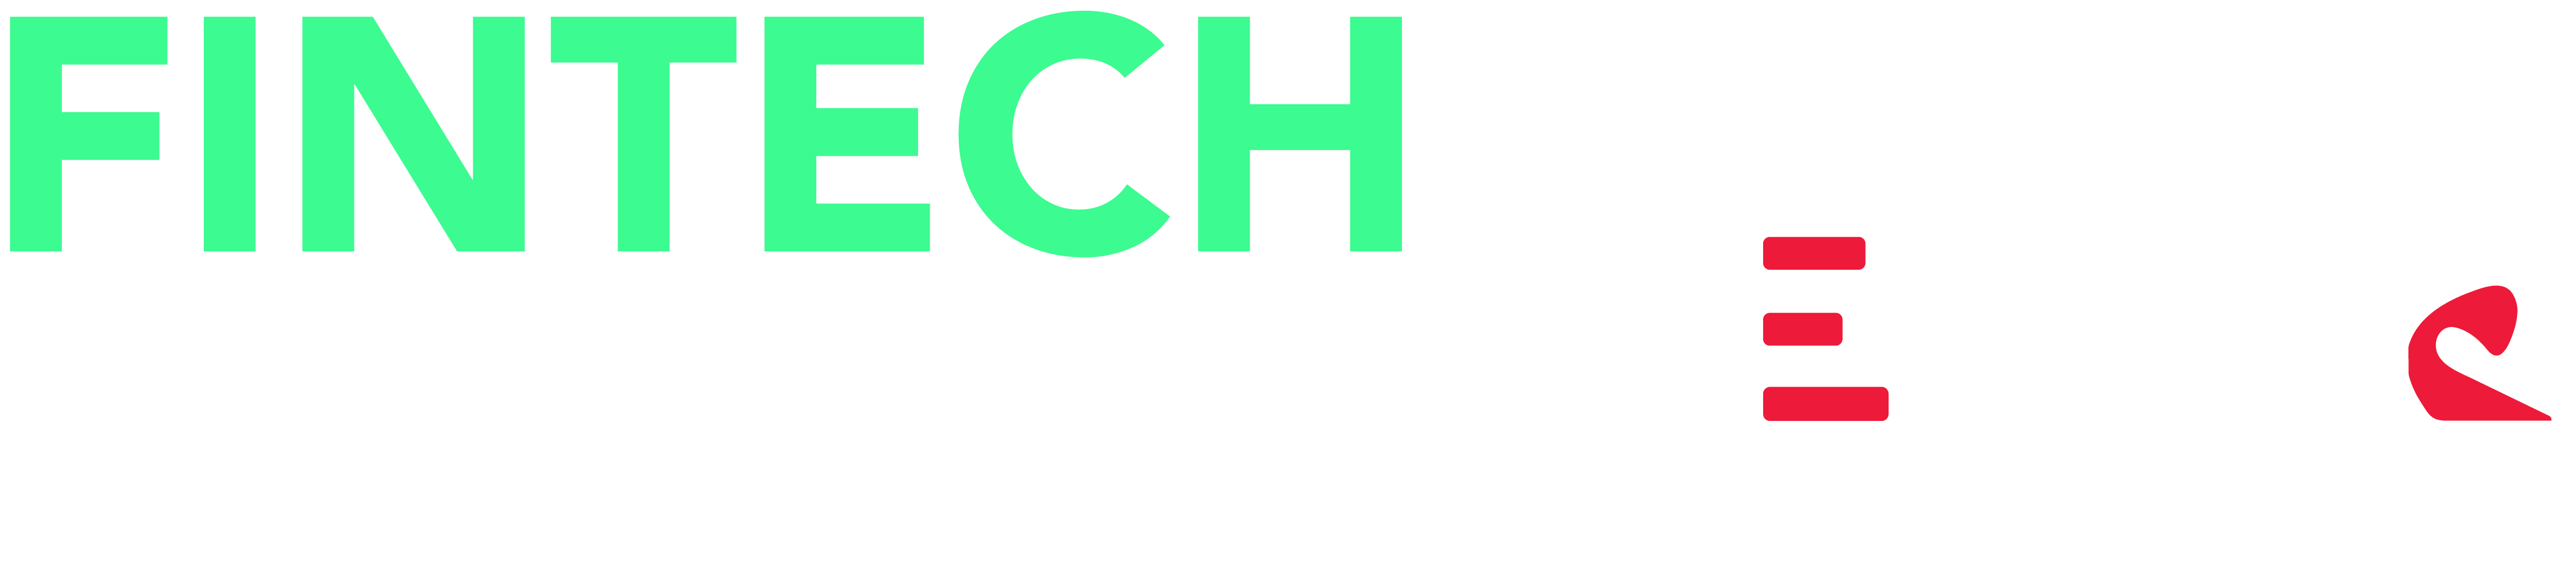 fintech bootcamp logo